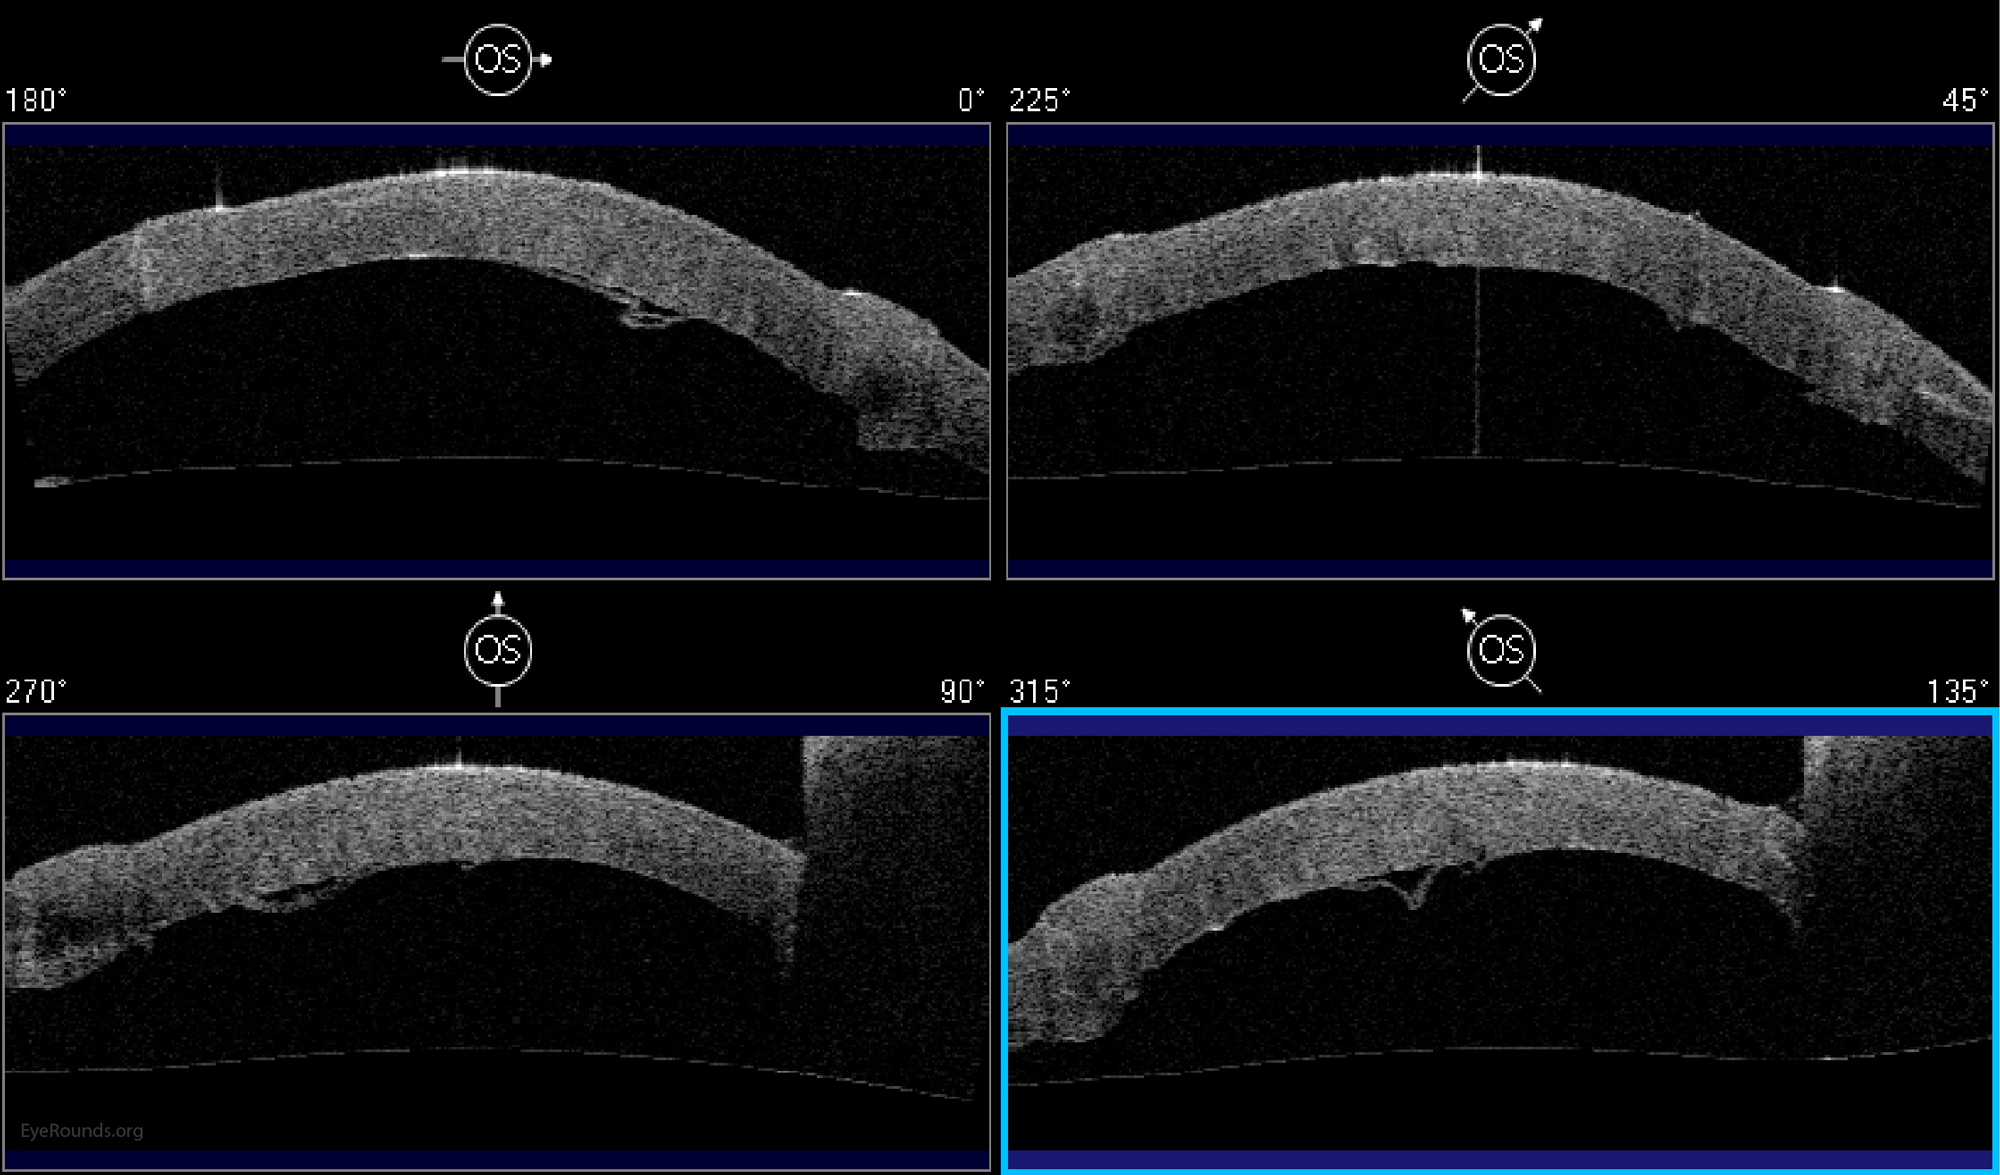  Anterior segment optical coherence tomography